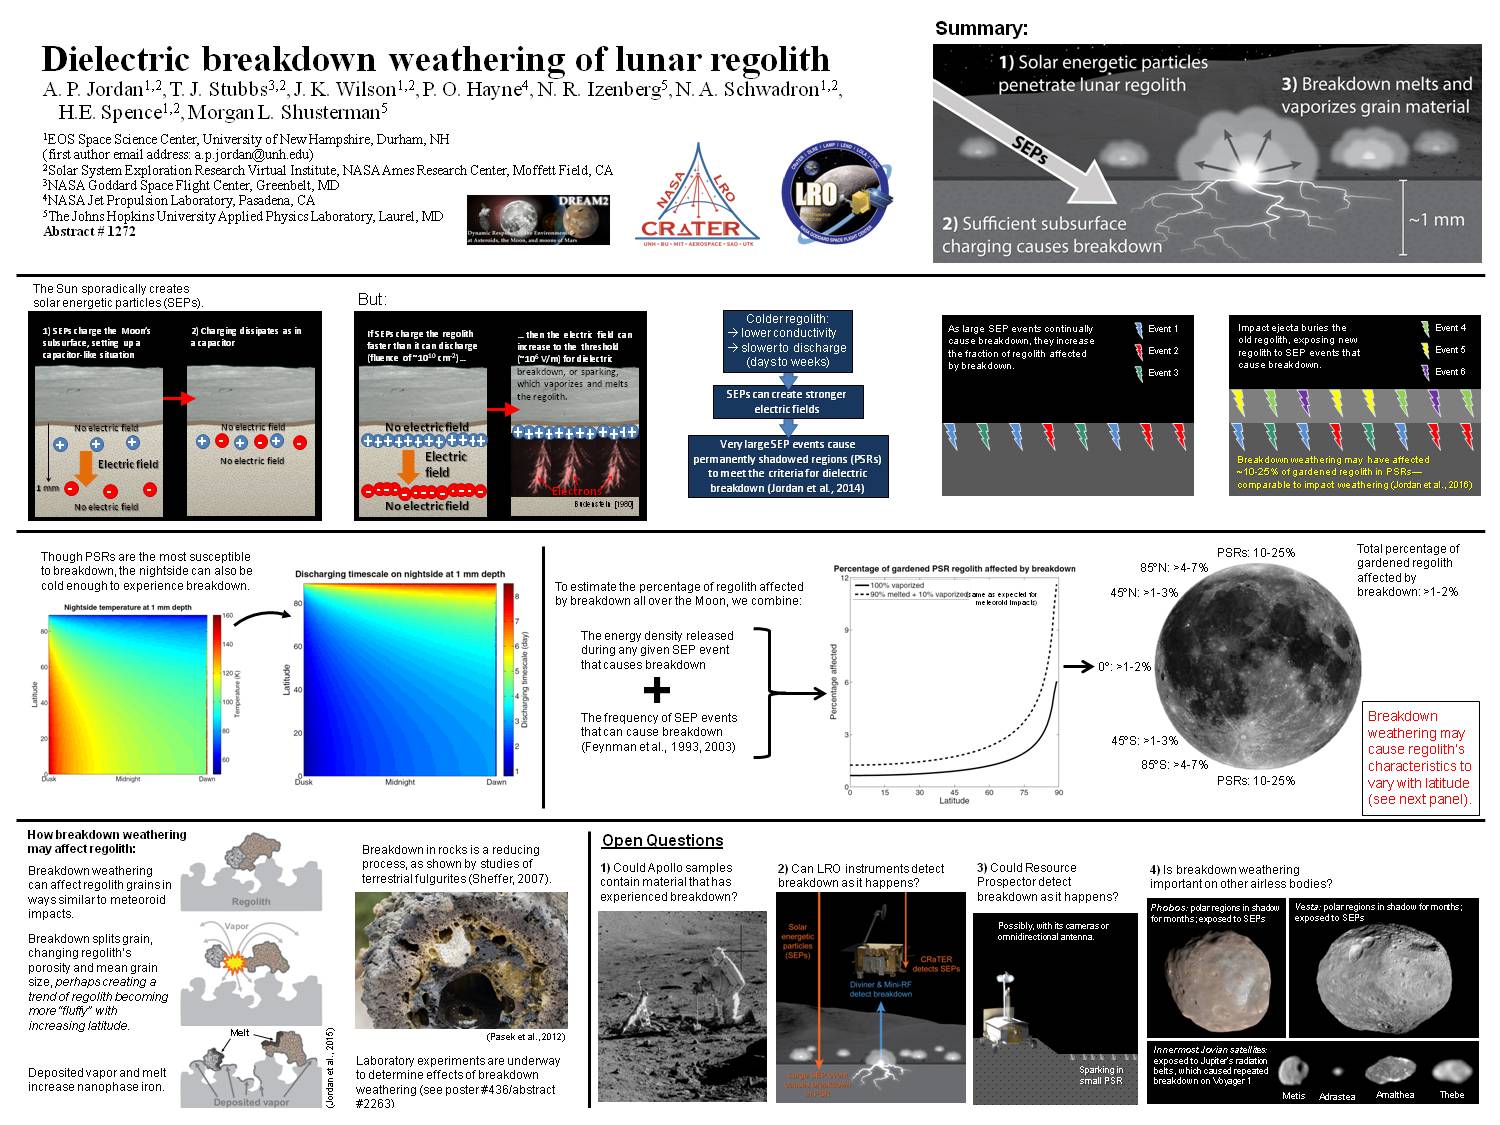 Dielectric Breakdown Weathering Of Lunar Regolith by api44